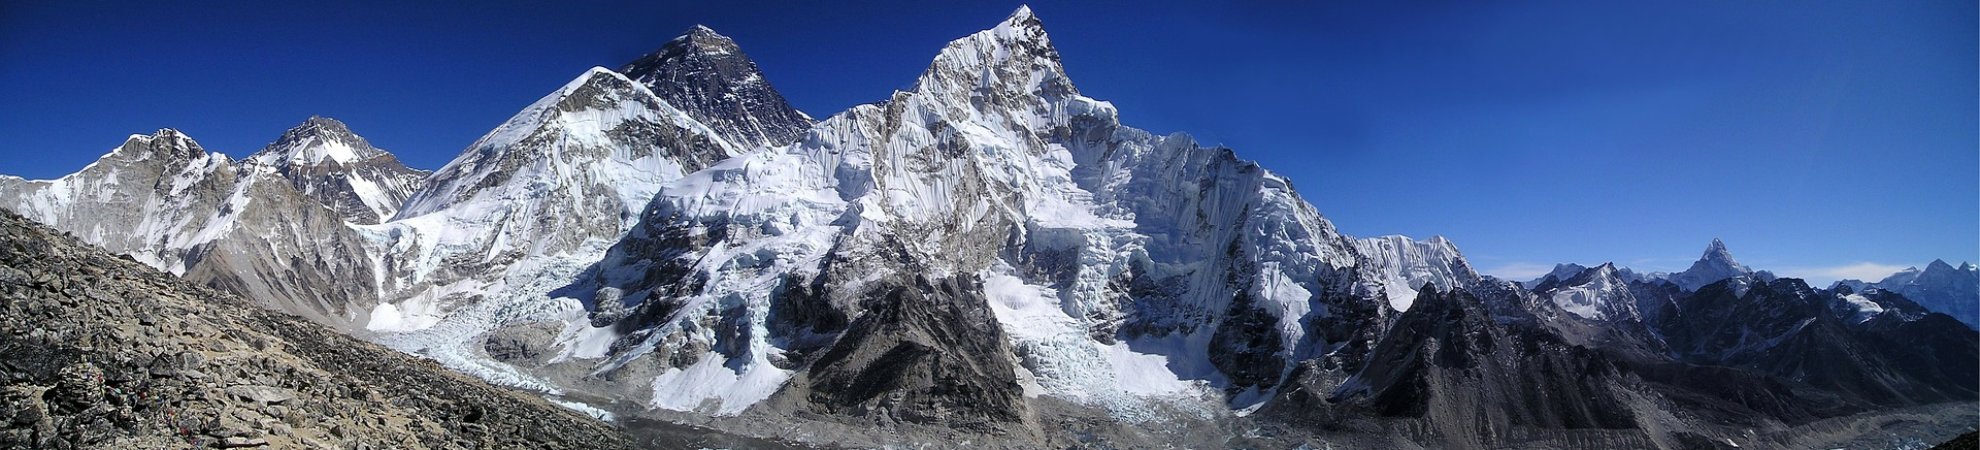 Everest waste cleanup